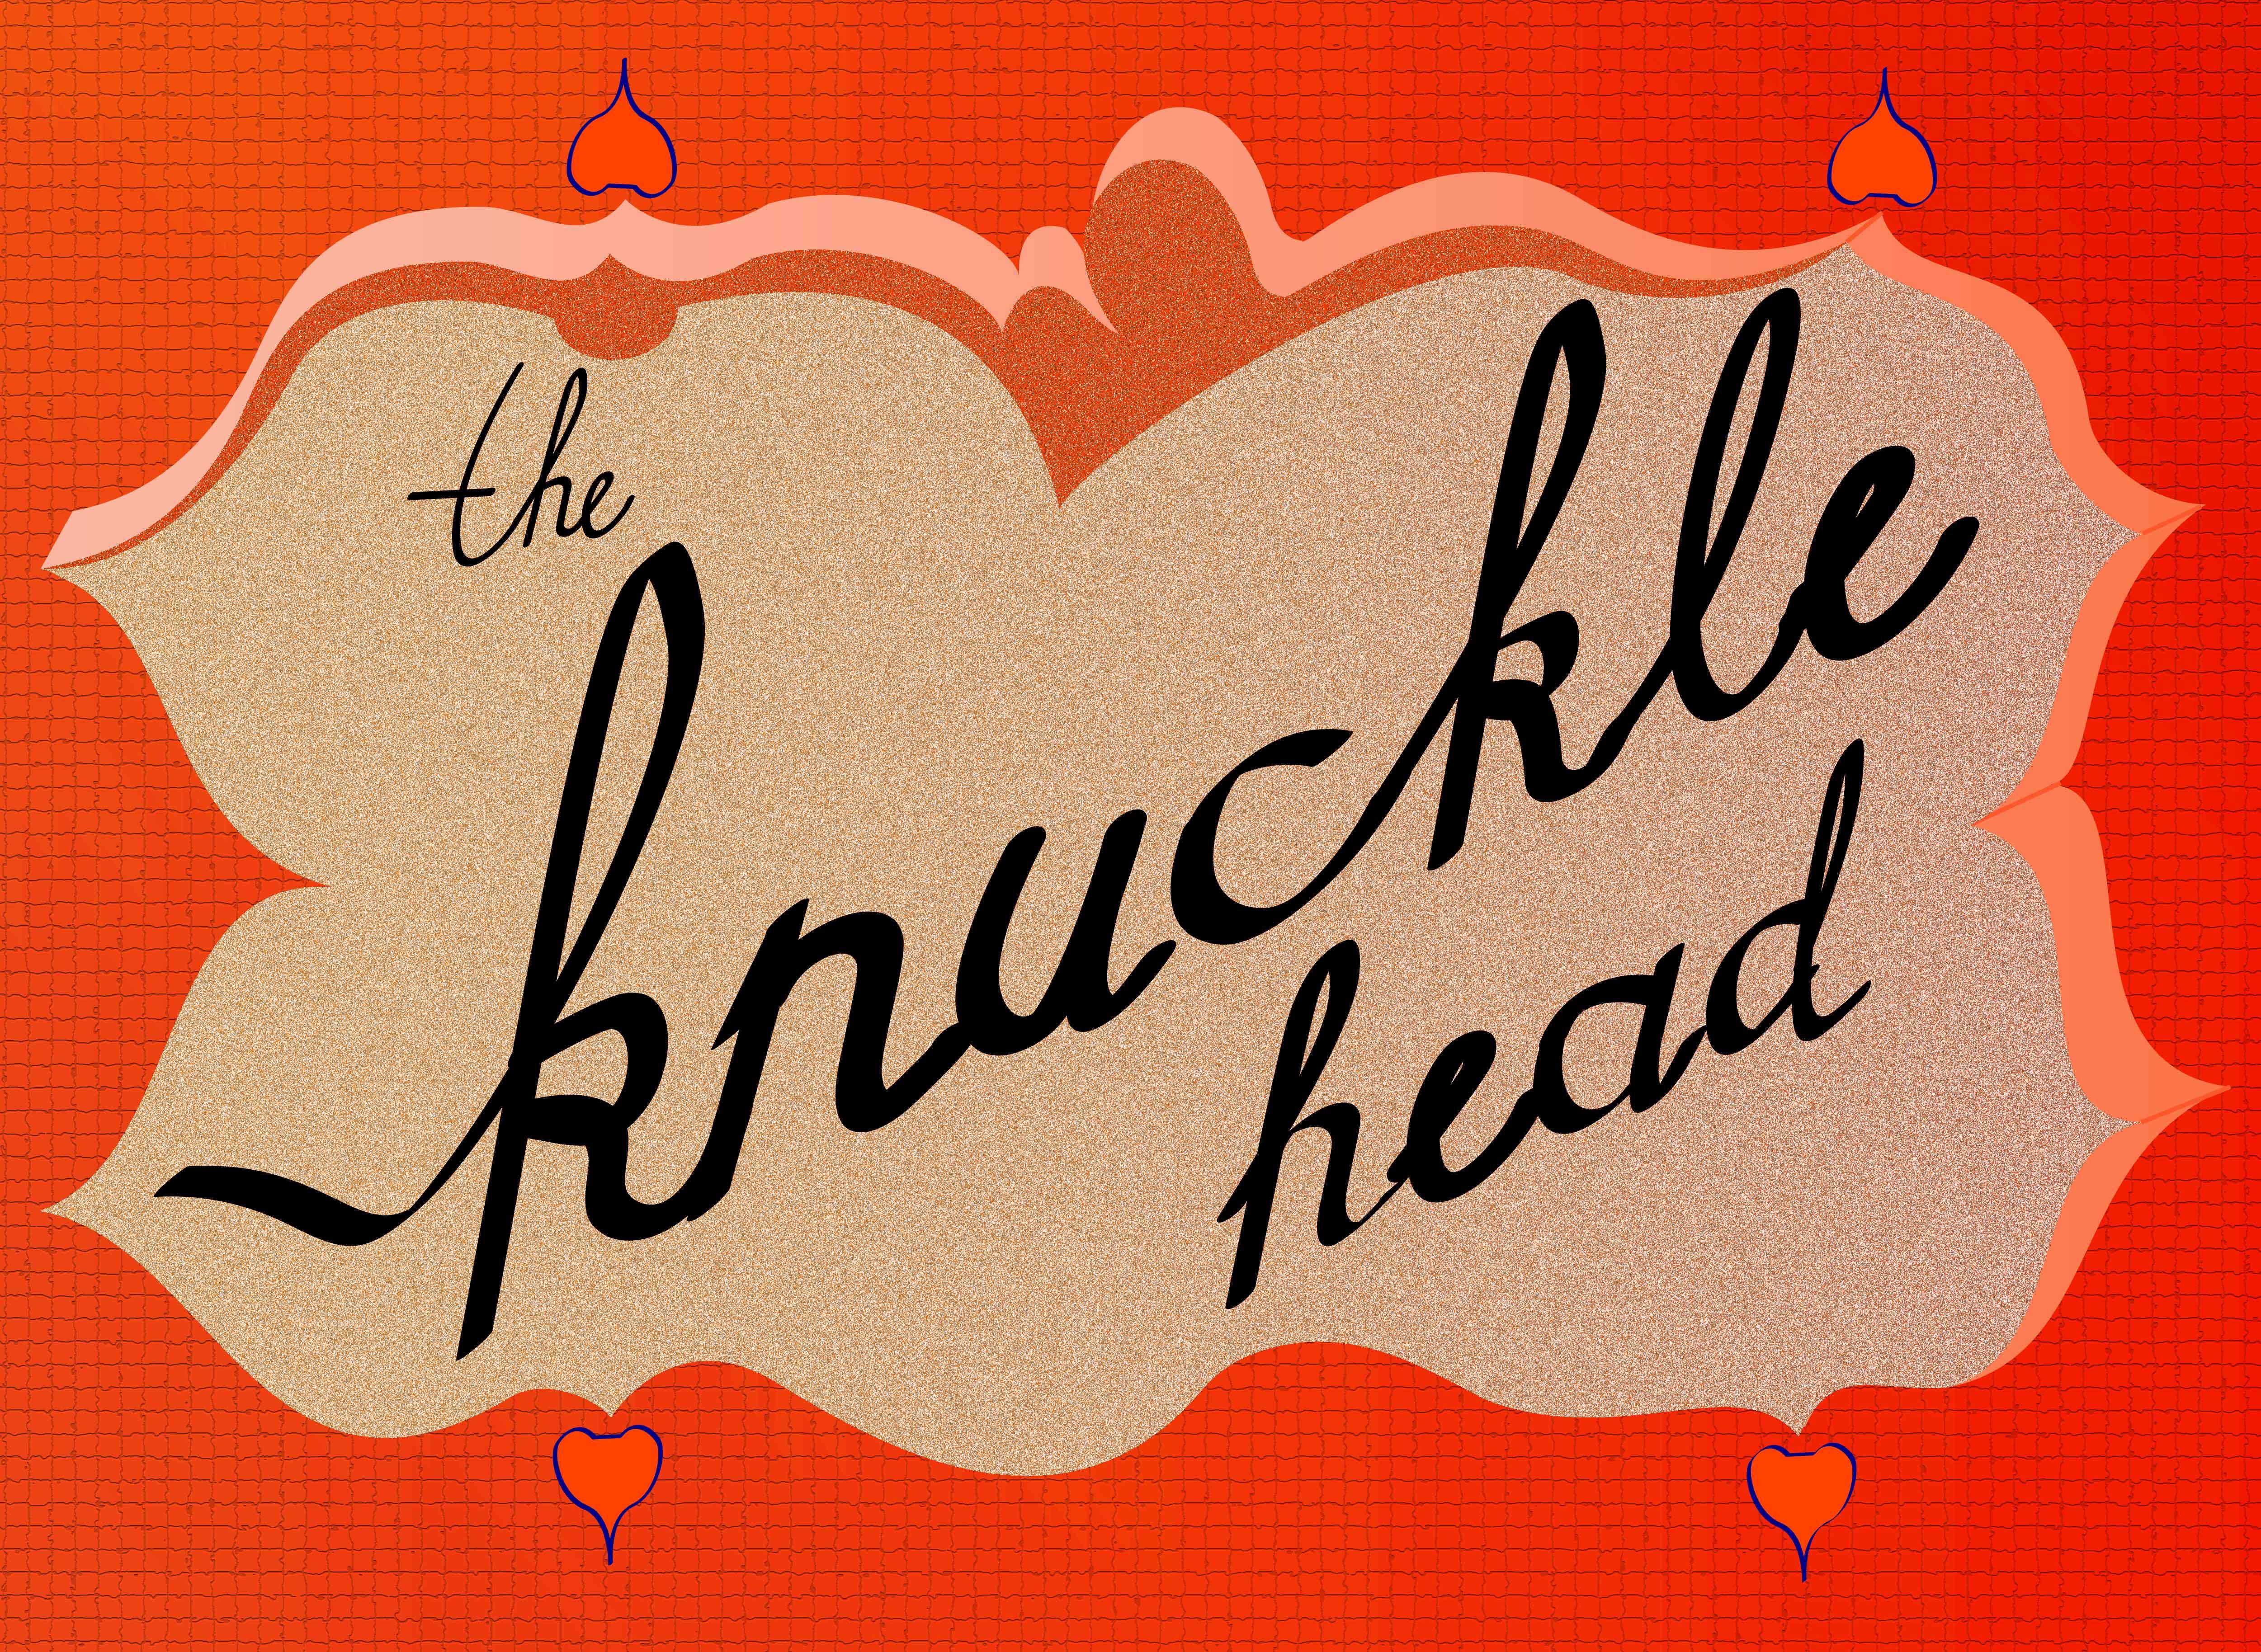 Knuckle Head